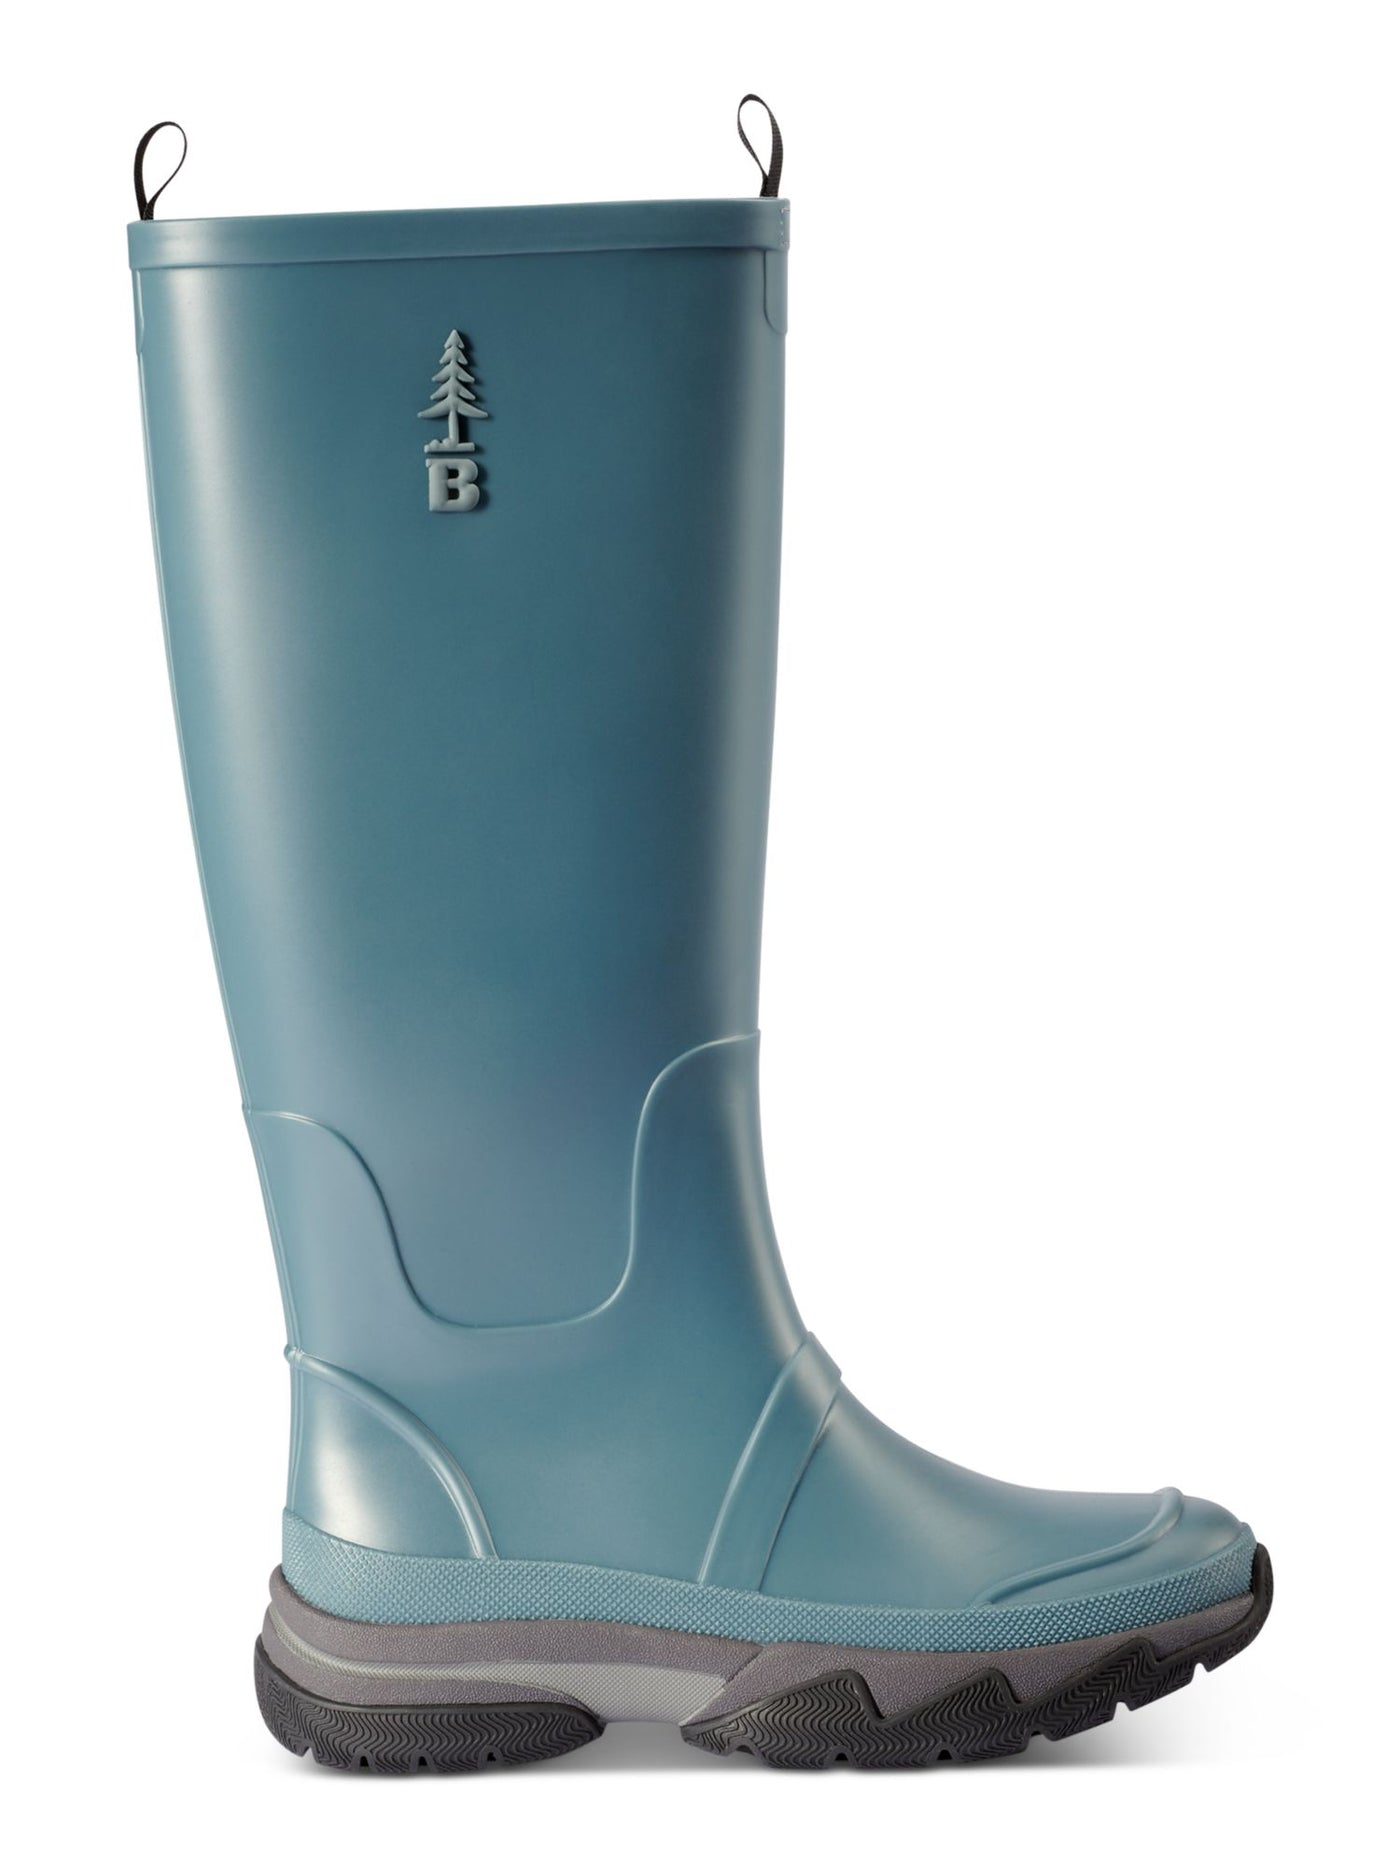 BASS OUTDOOR Womens Navy Comfort Slip Resistant Field Round Toe Wedge Rain Boots 5